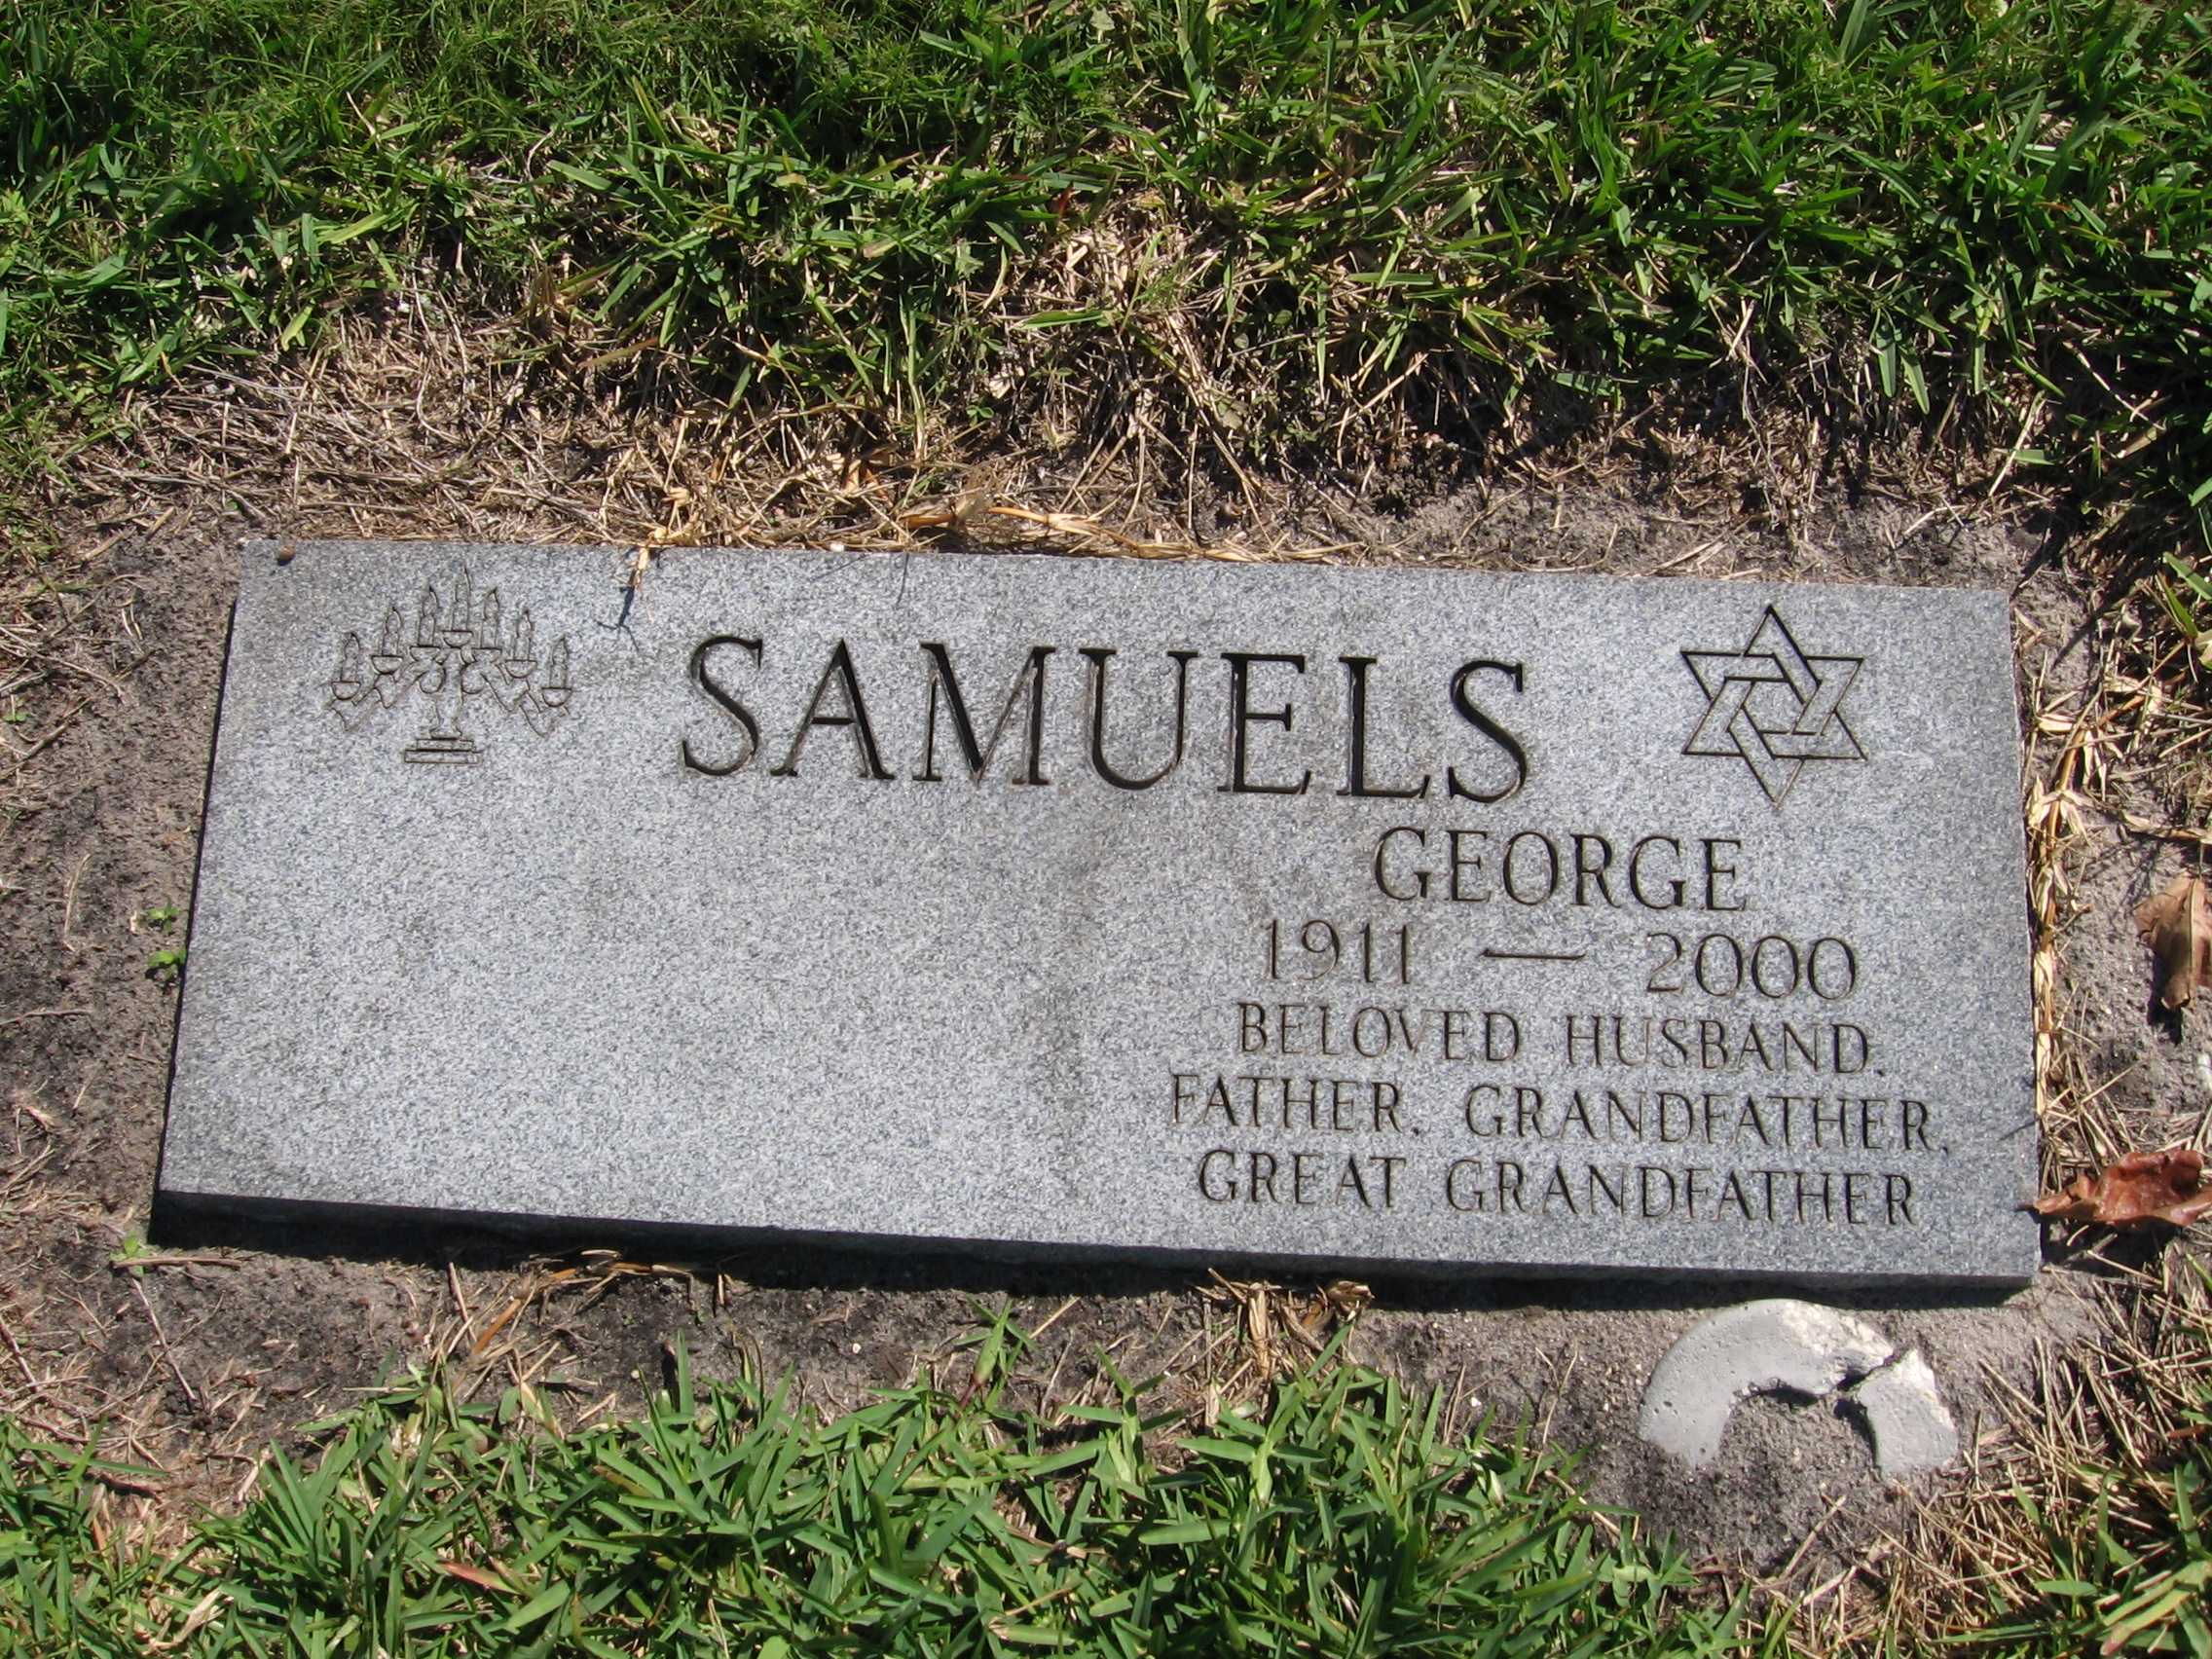 George Samuels